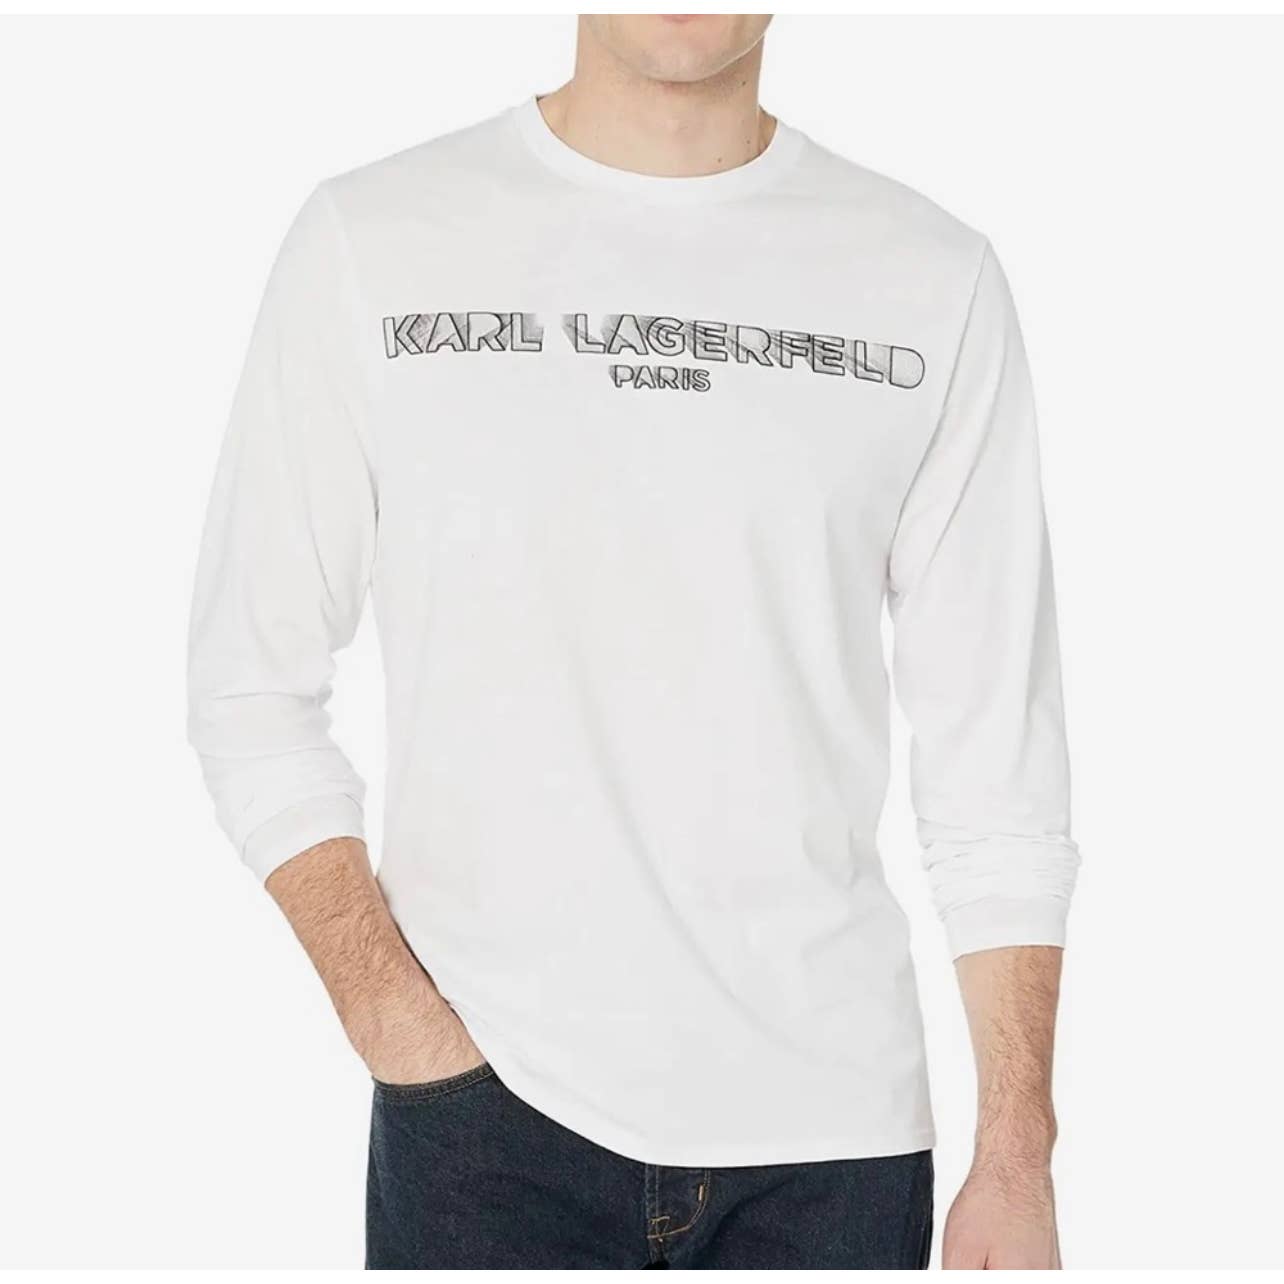 Karl Lagerfeld Paris Men's Long Sleeve Tee Shirt, Black & White Signature, XL